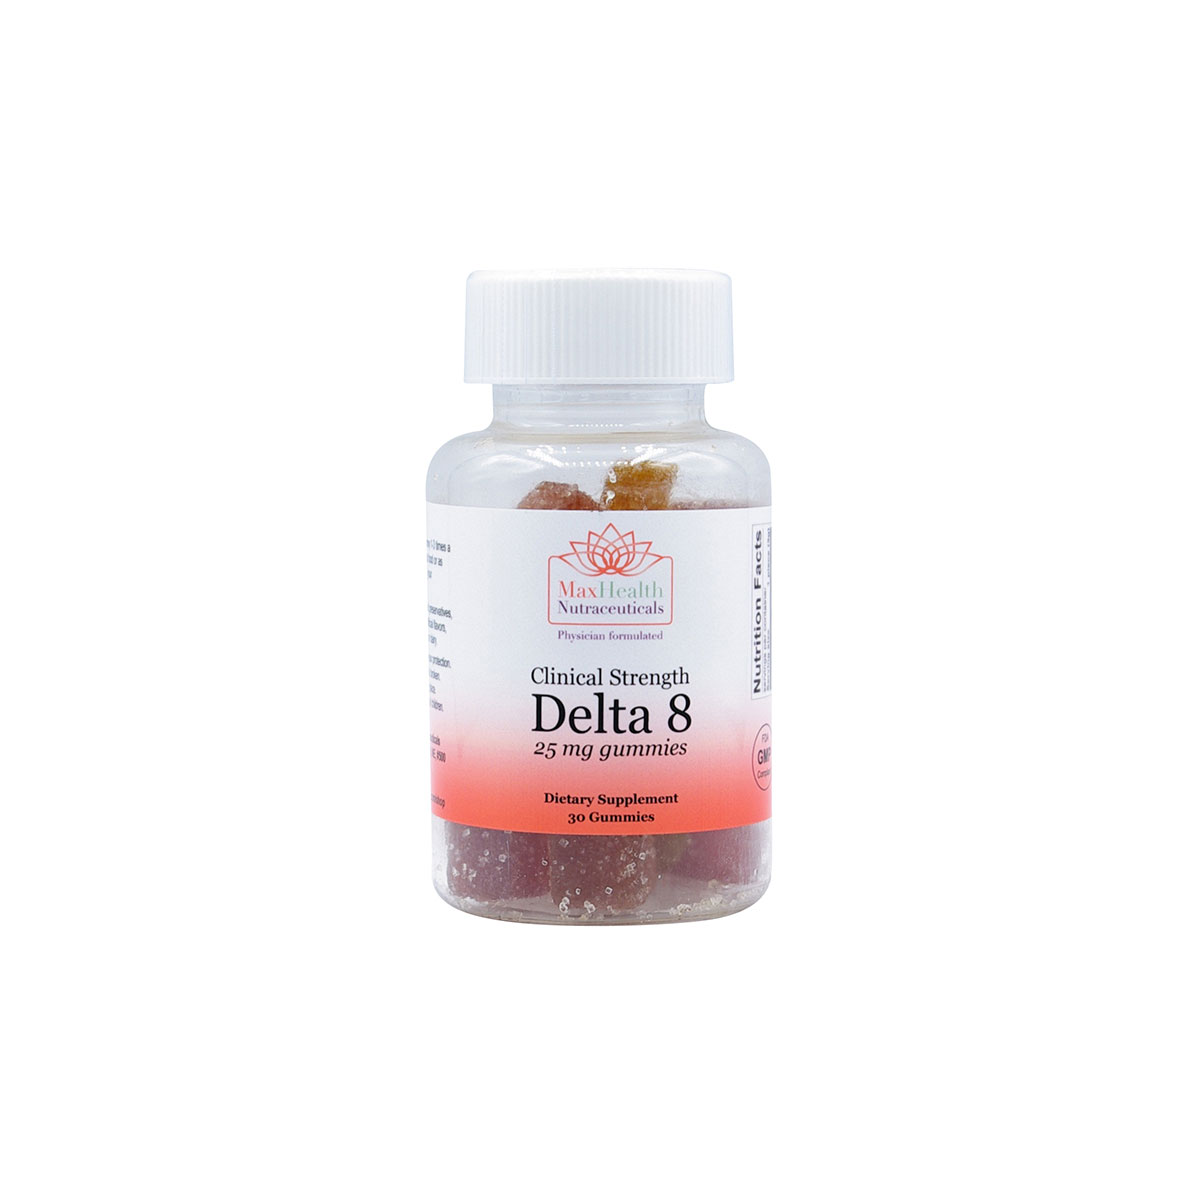 11Clinical Strength Delta 8 Gummies